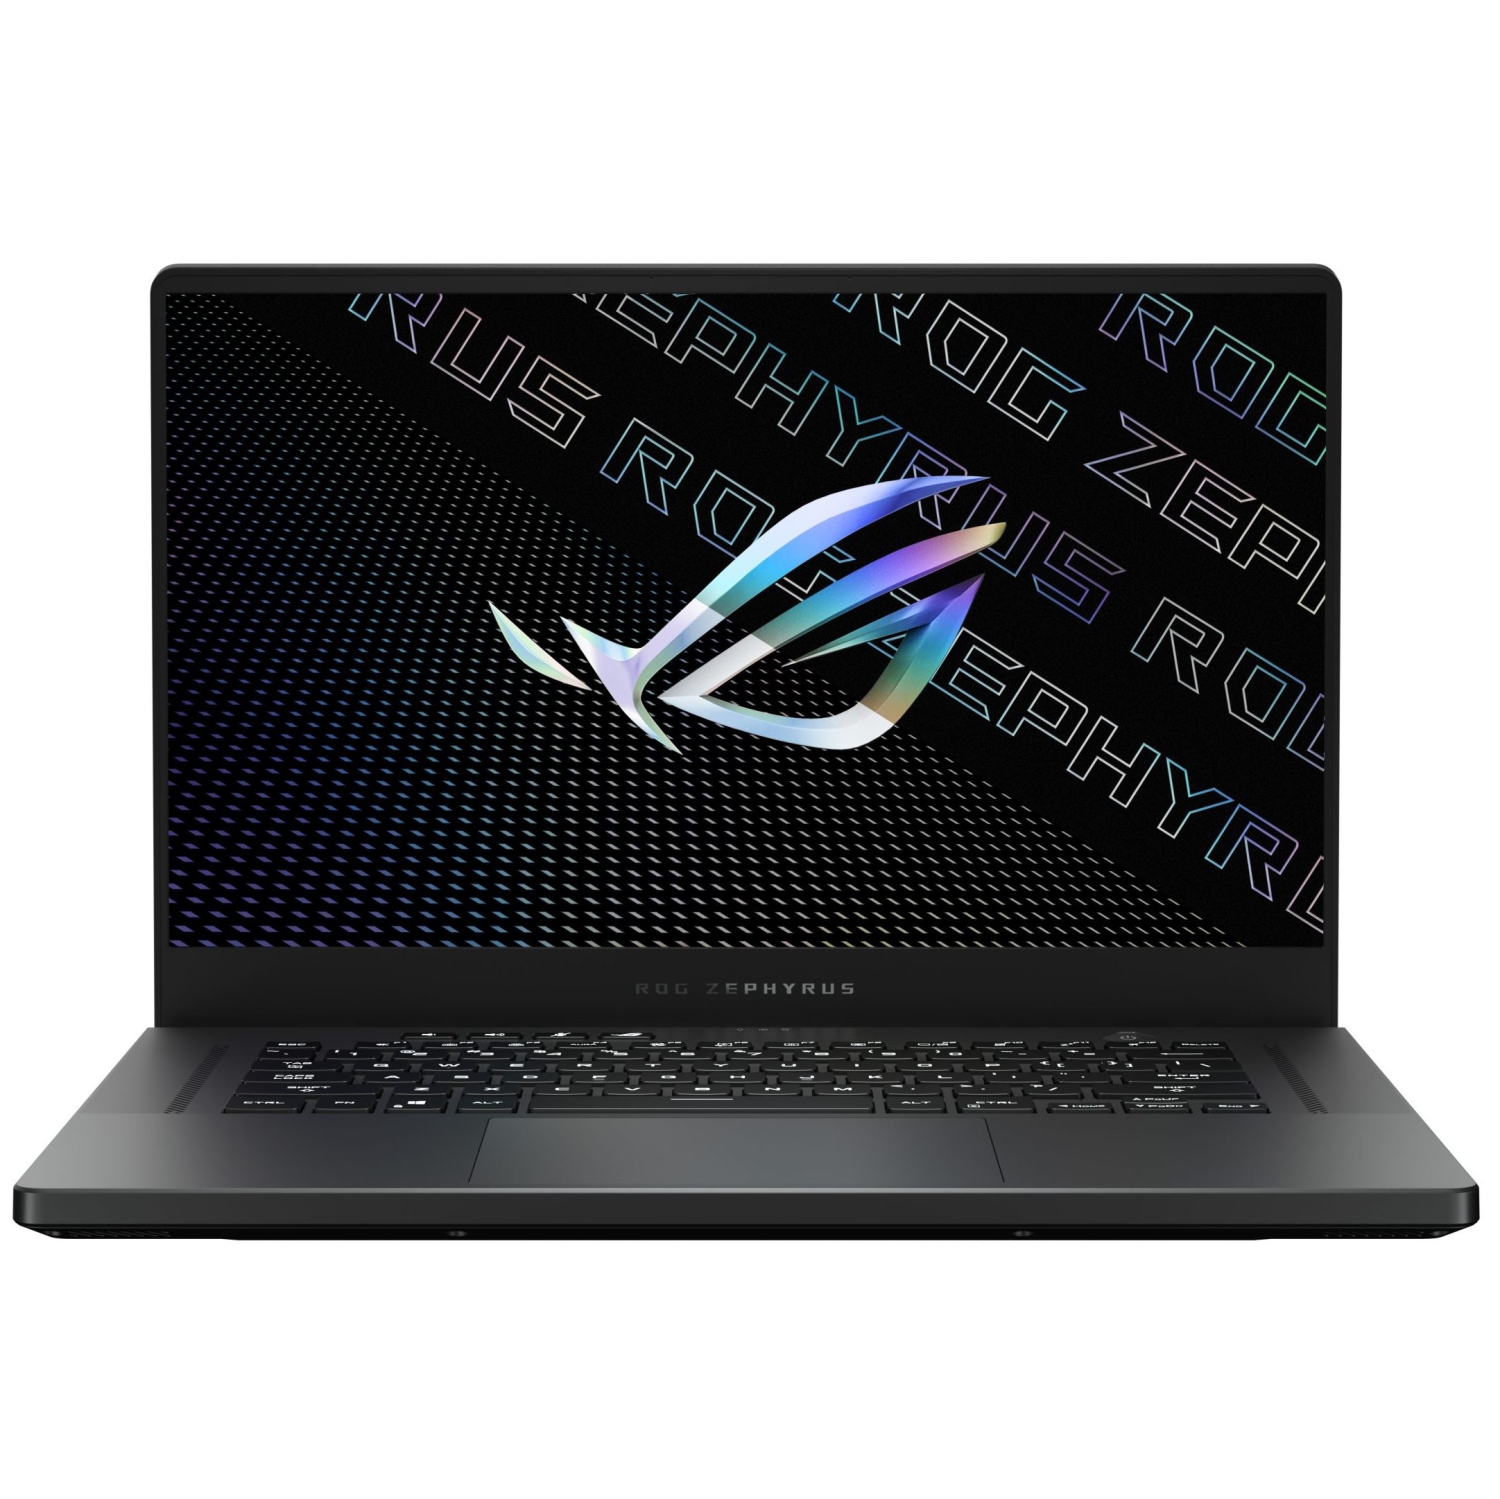 Custom ASUS ROG Zephyrus G15 Laptop (AMD Ryzen 9 5900HS, 16GB RAM, 2TB m.2 SATA SSD, NVIDIA RTX 3070, Win 10 Pro)